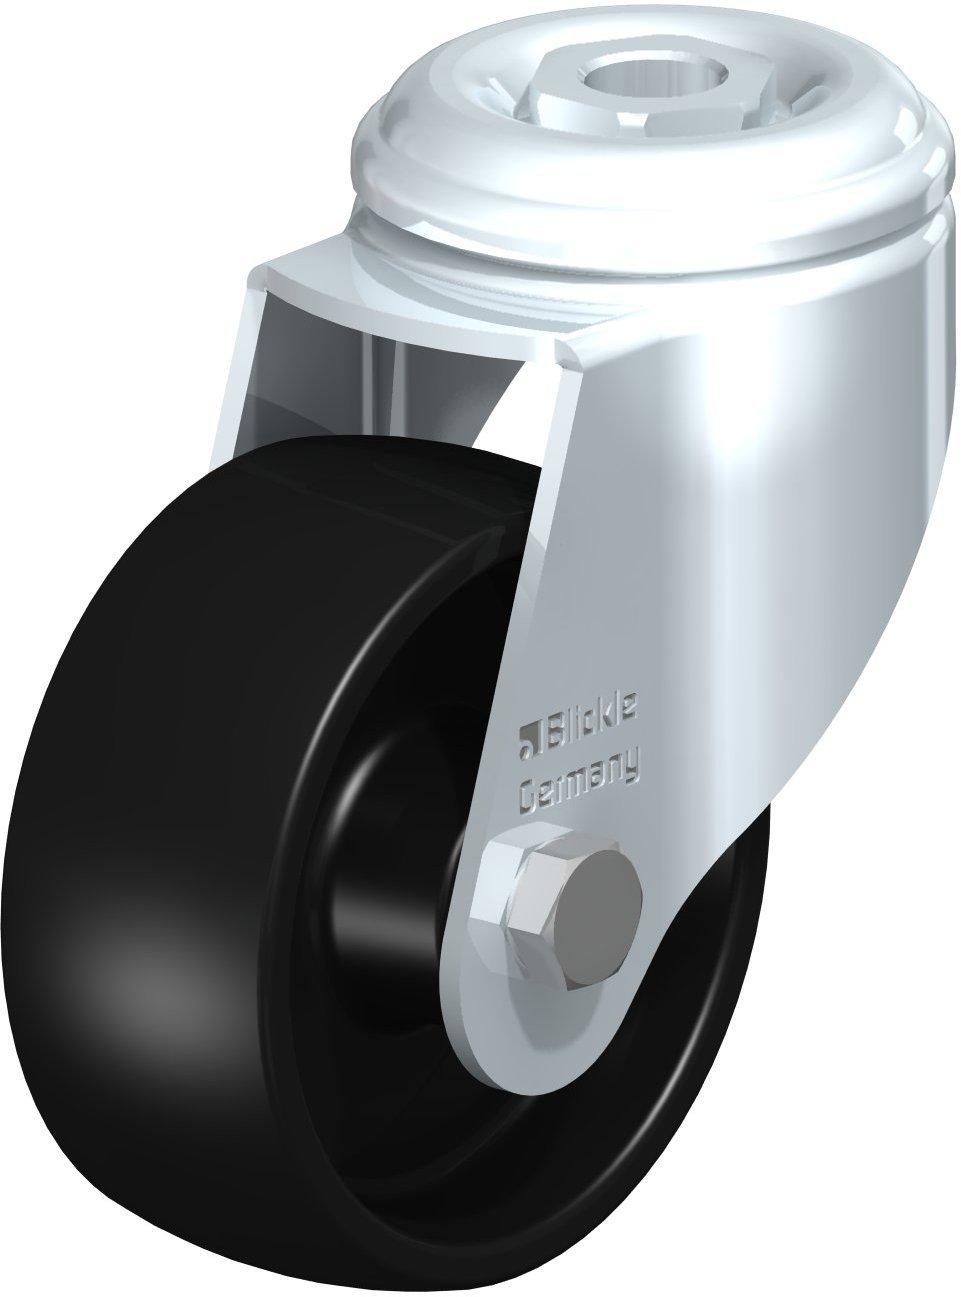 Medium Duty Institutional Swivel Casters - Hollow Kingpin, Plain Bore, Impact Resistant Black Nylon Wheel